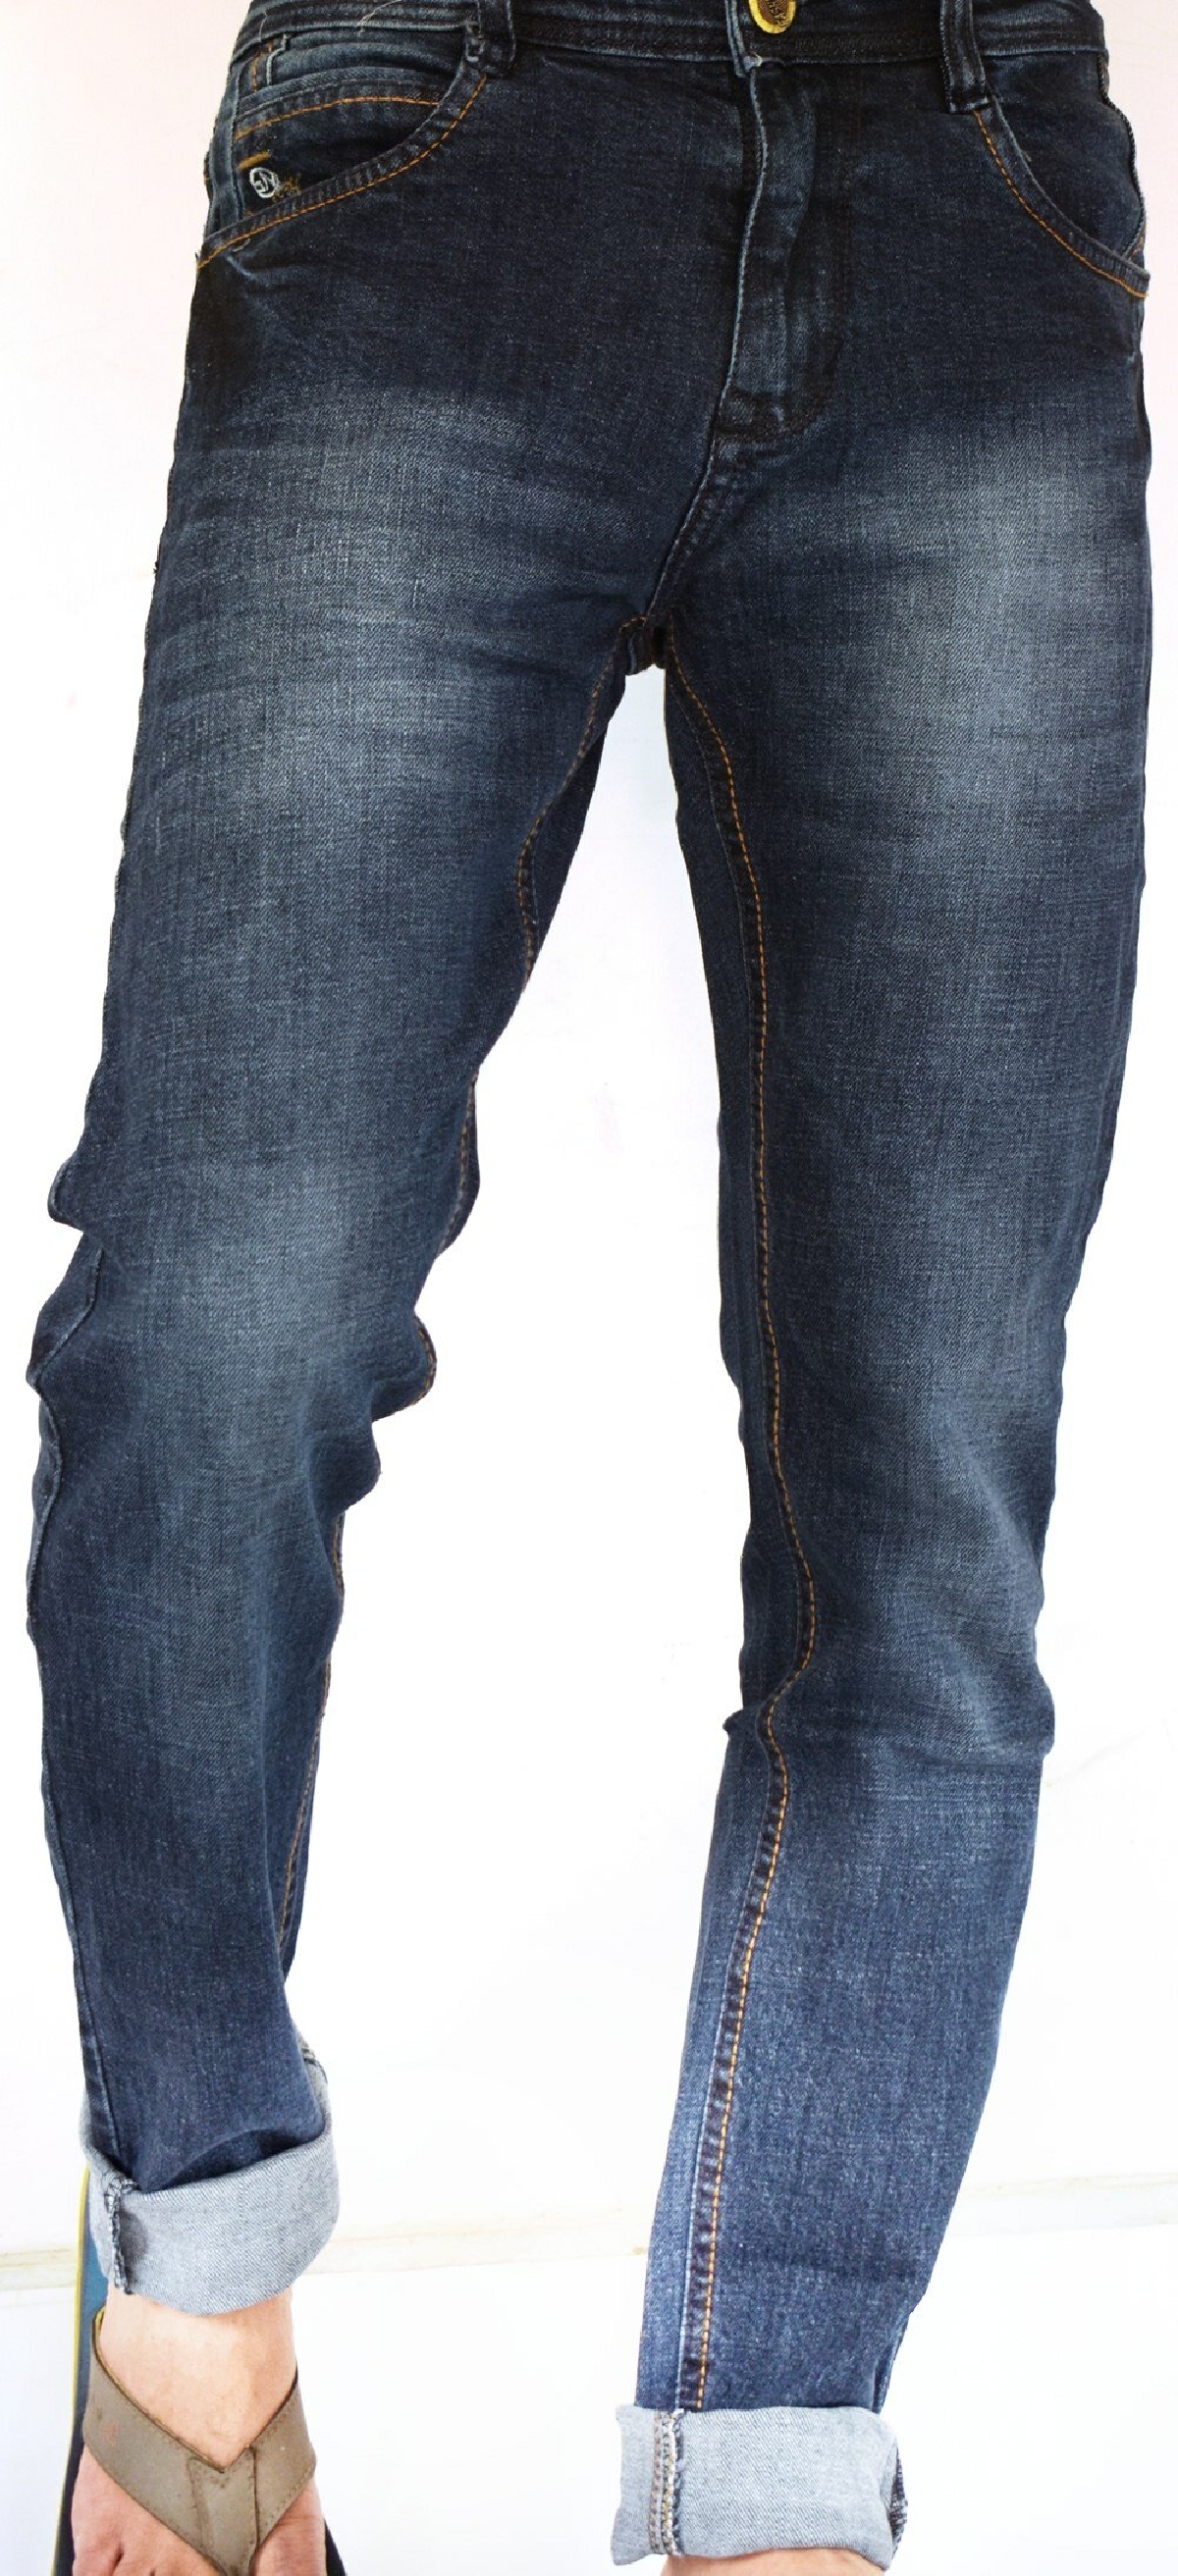 sparky stretchable jeans